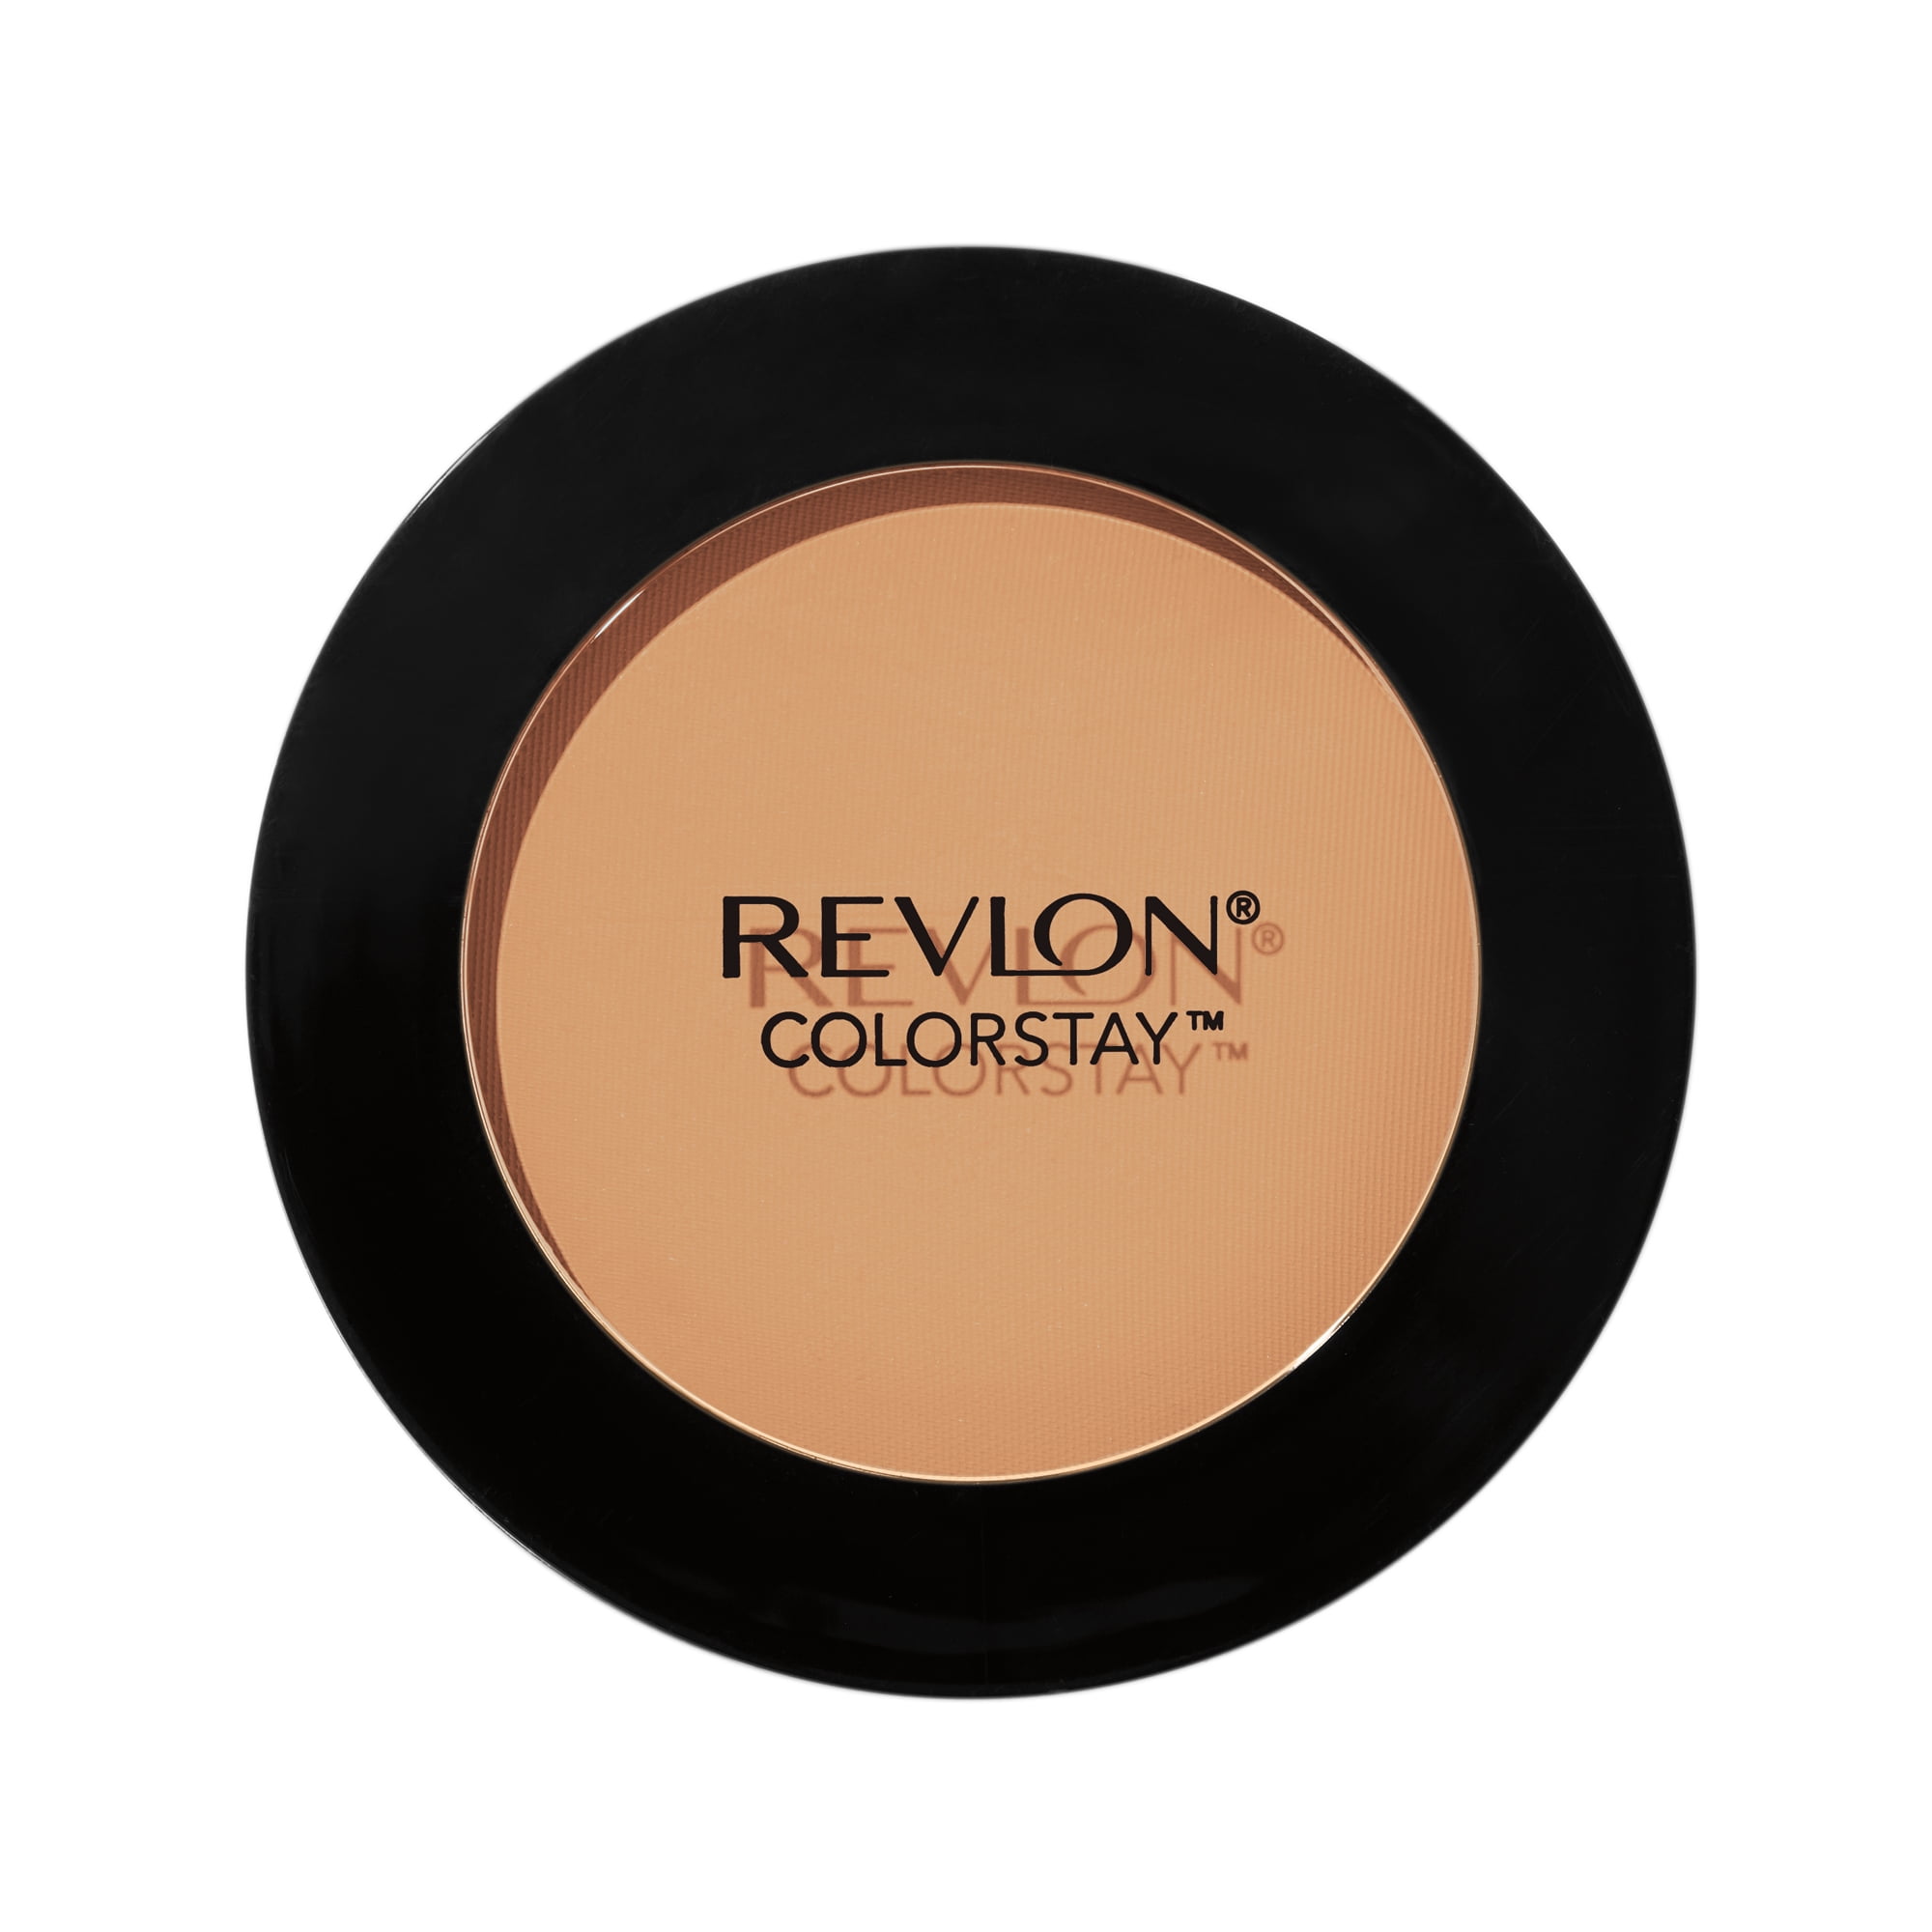 Revlon ColorStay Pressed Powder, Oil Free, Long Wearing Setting Powder, 850 Medium Deep, 0.3 oz